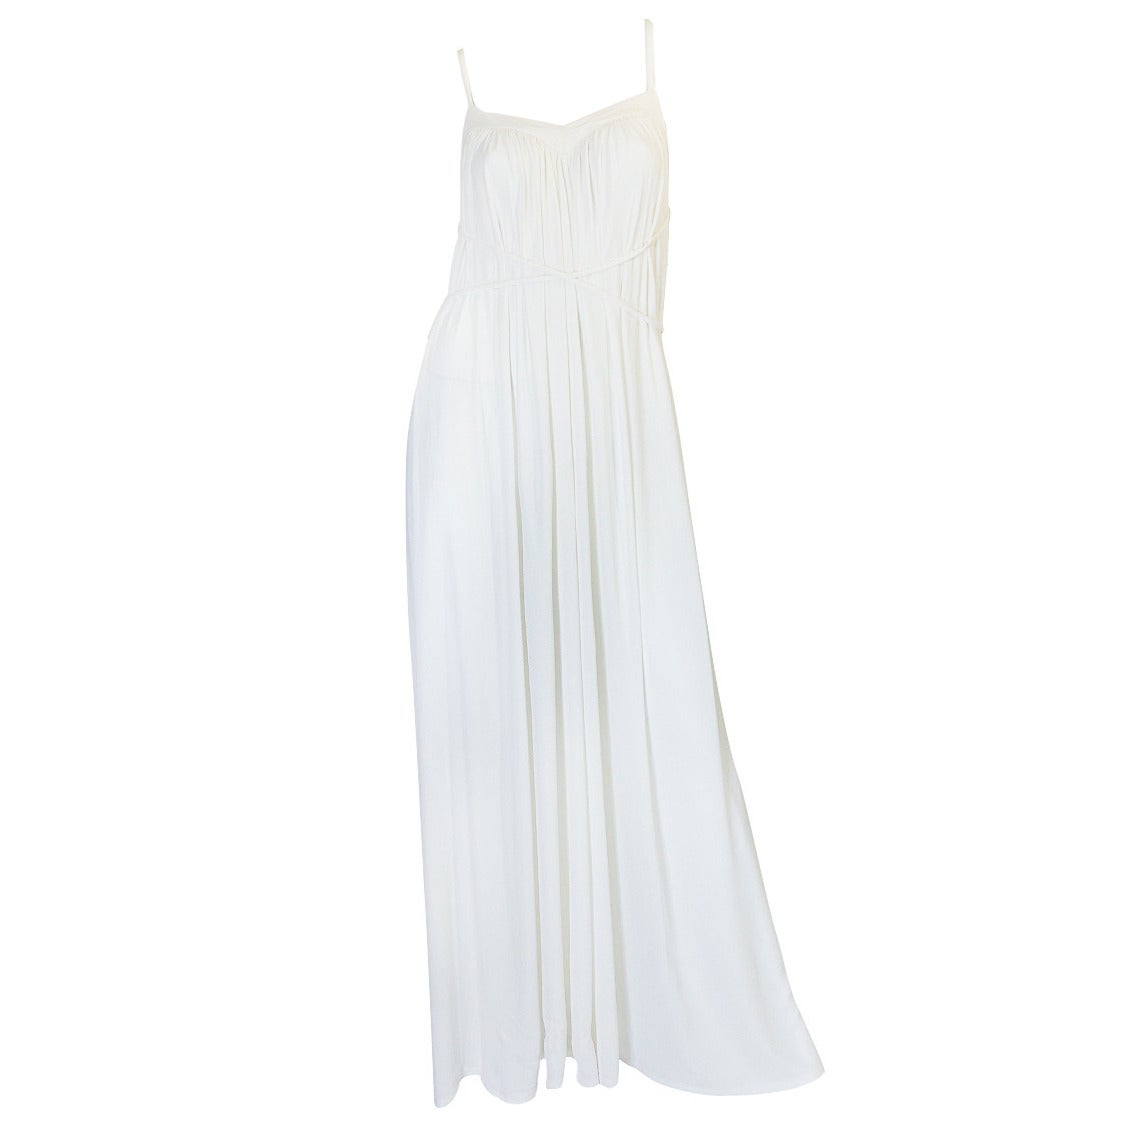 Ossie Clark-designed Quorum white jersey dress, 1970s